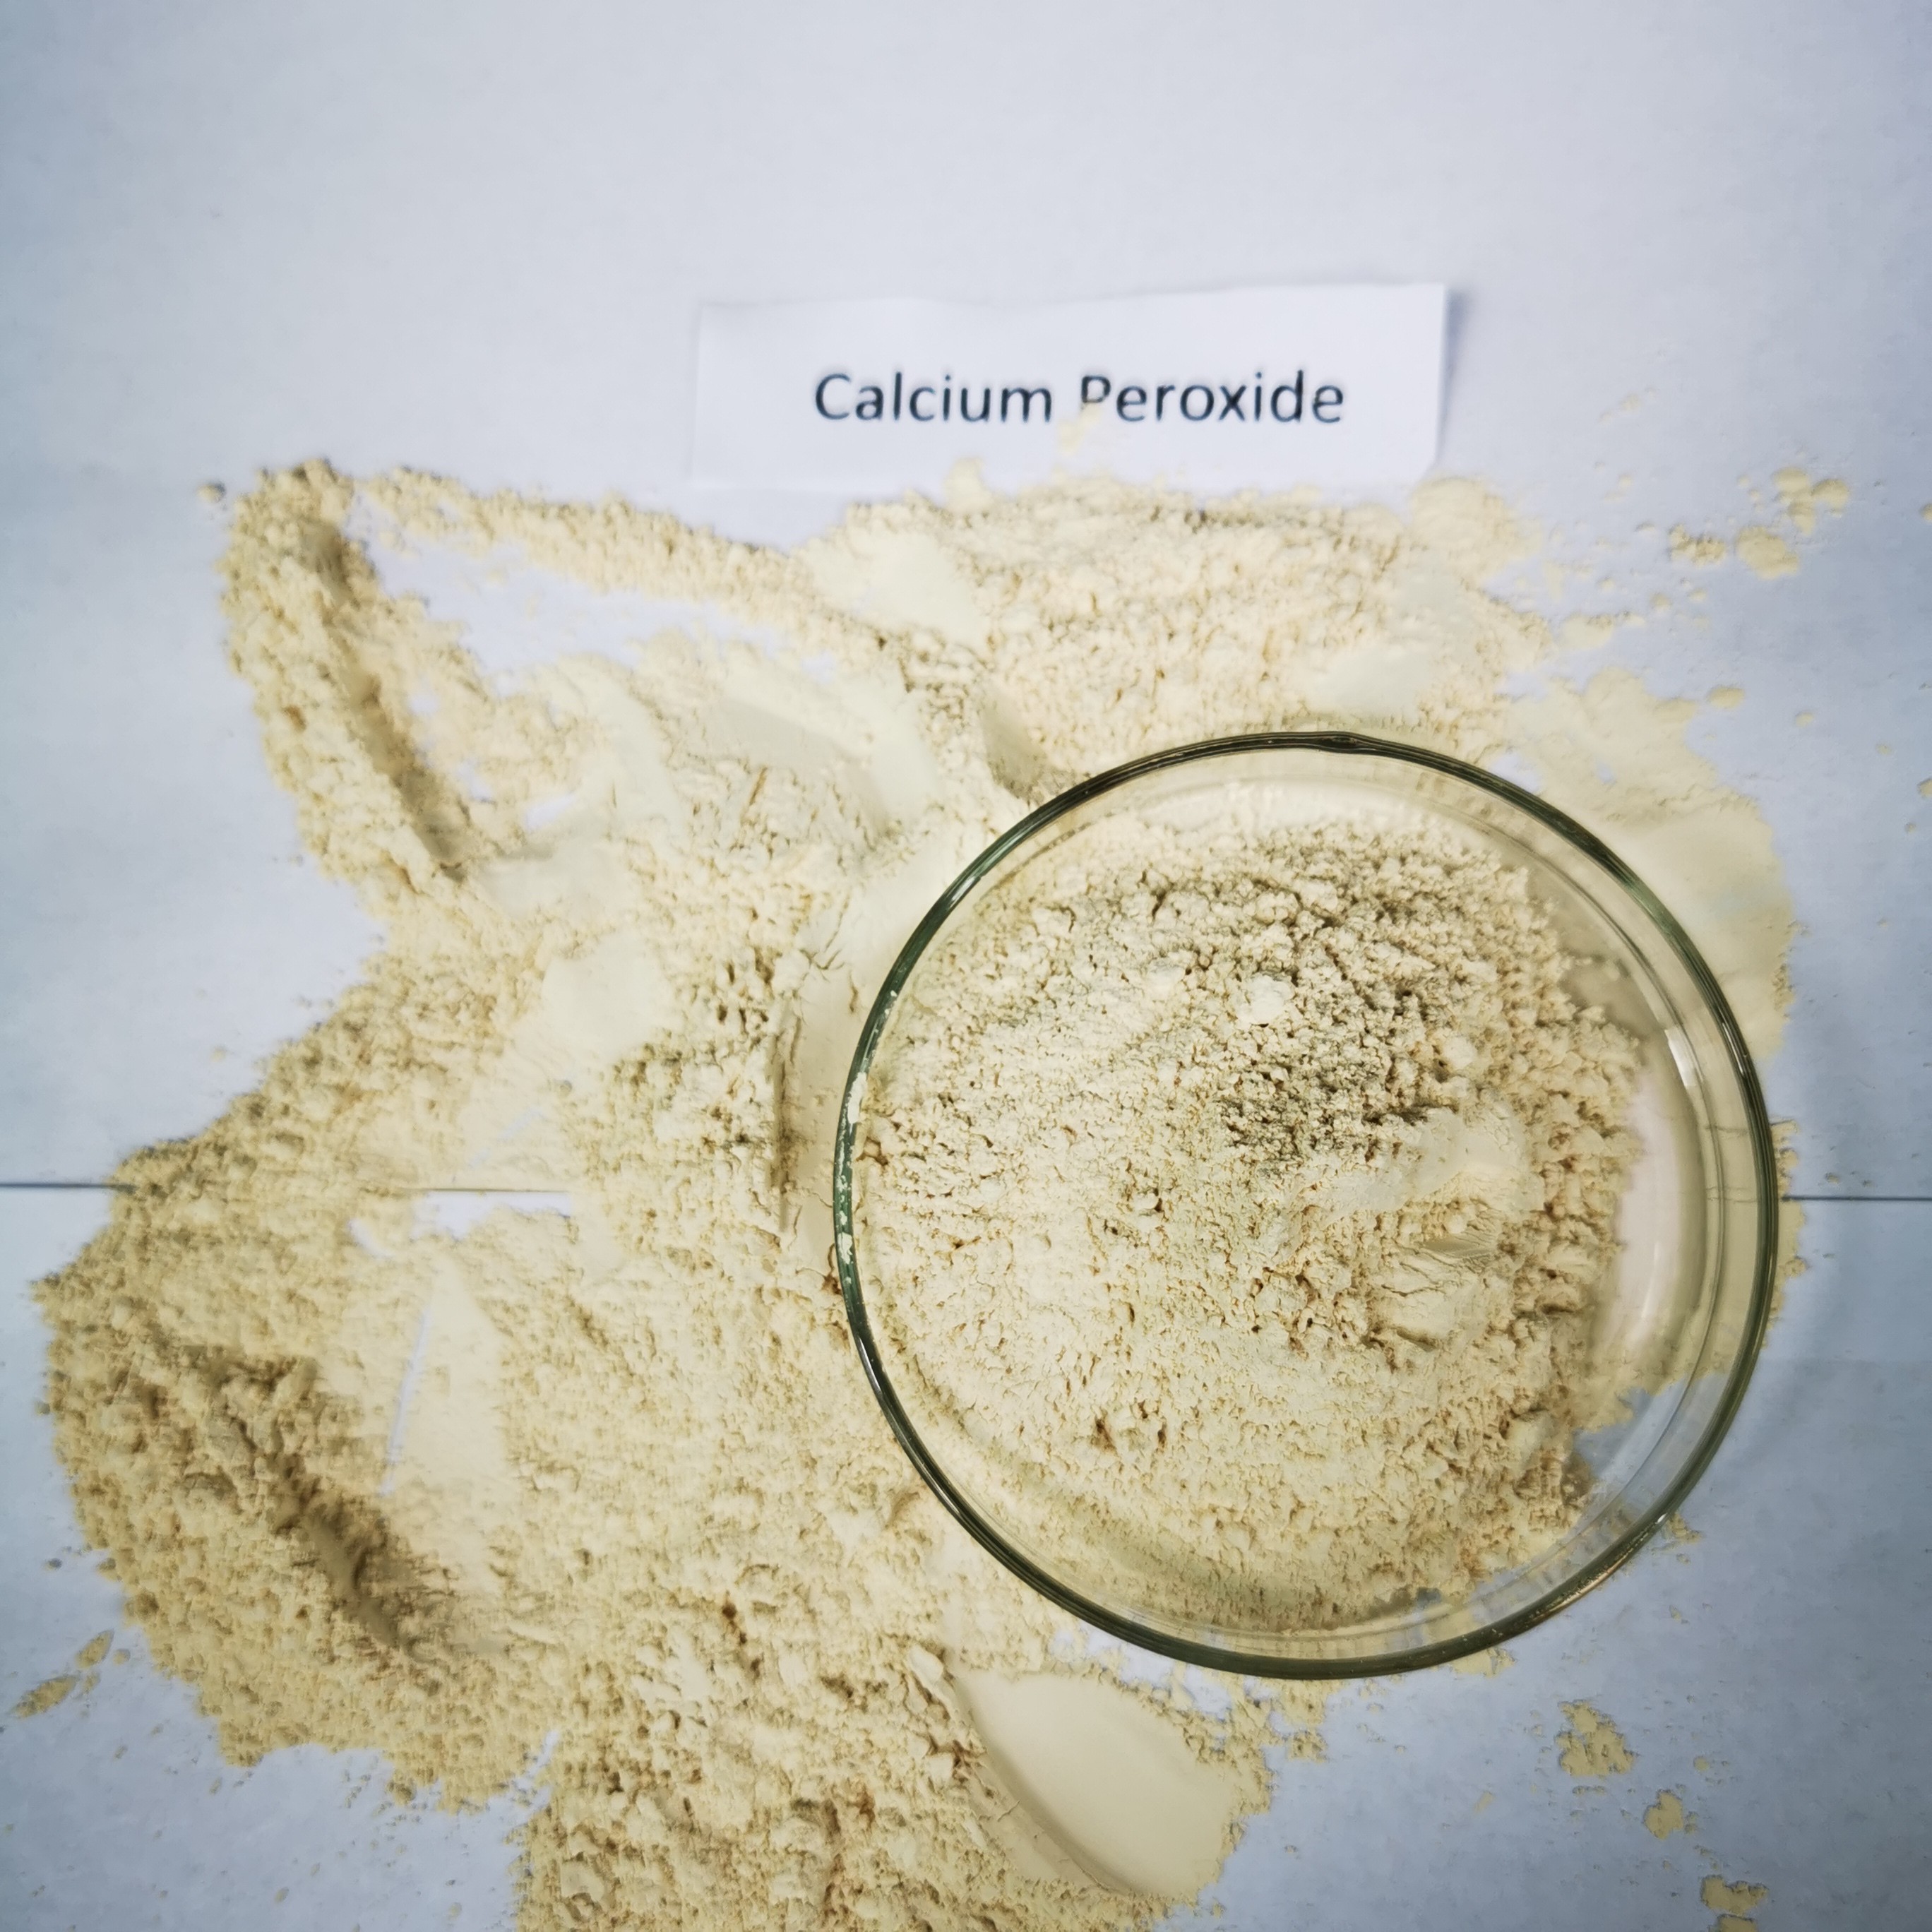 Peróxido químico contínuo do cálcio no alimento para o descoramento CAS 1305-79-9 da farinha